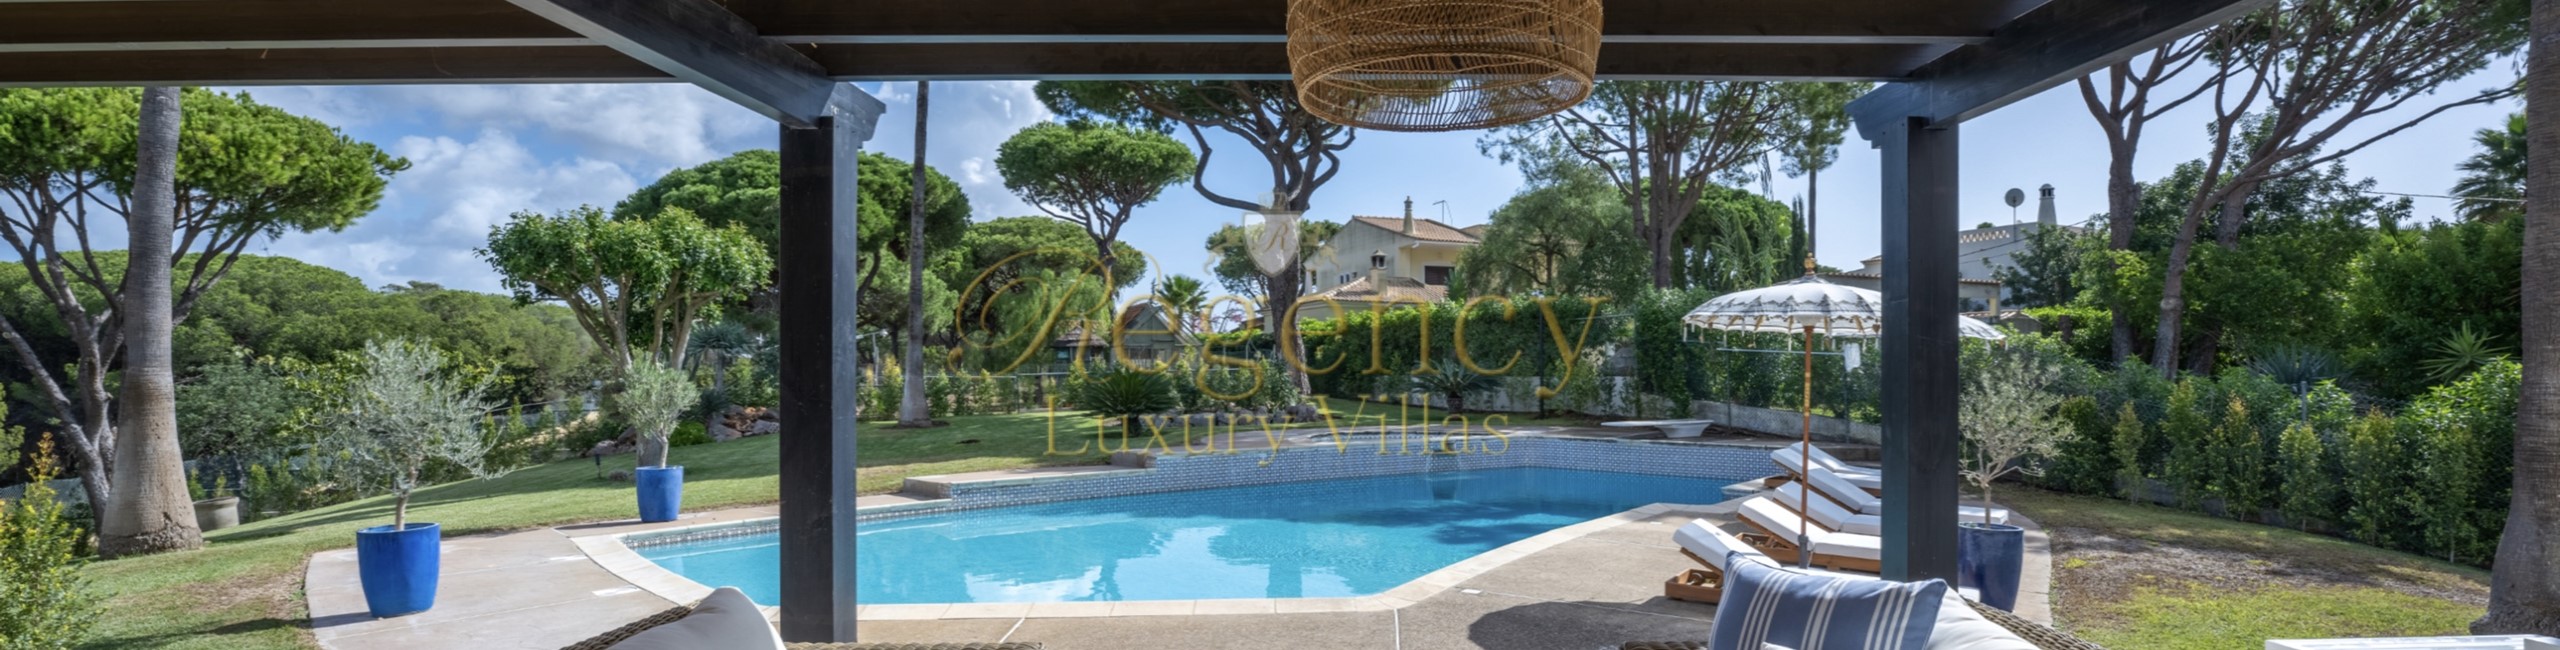 Luxury 5 Bedroom Villa To Rent In Vilamoura Portugal